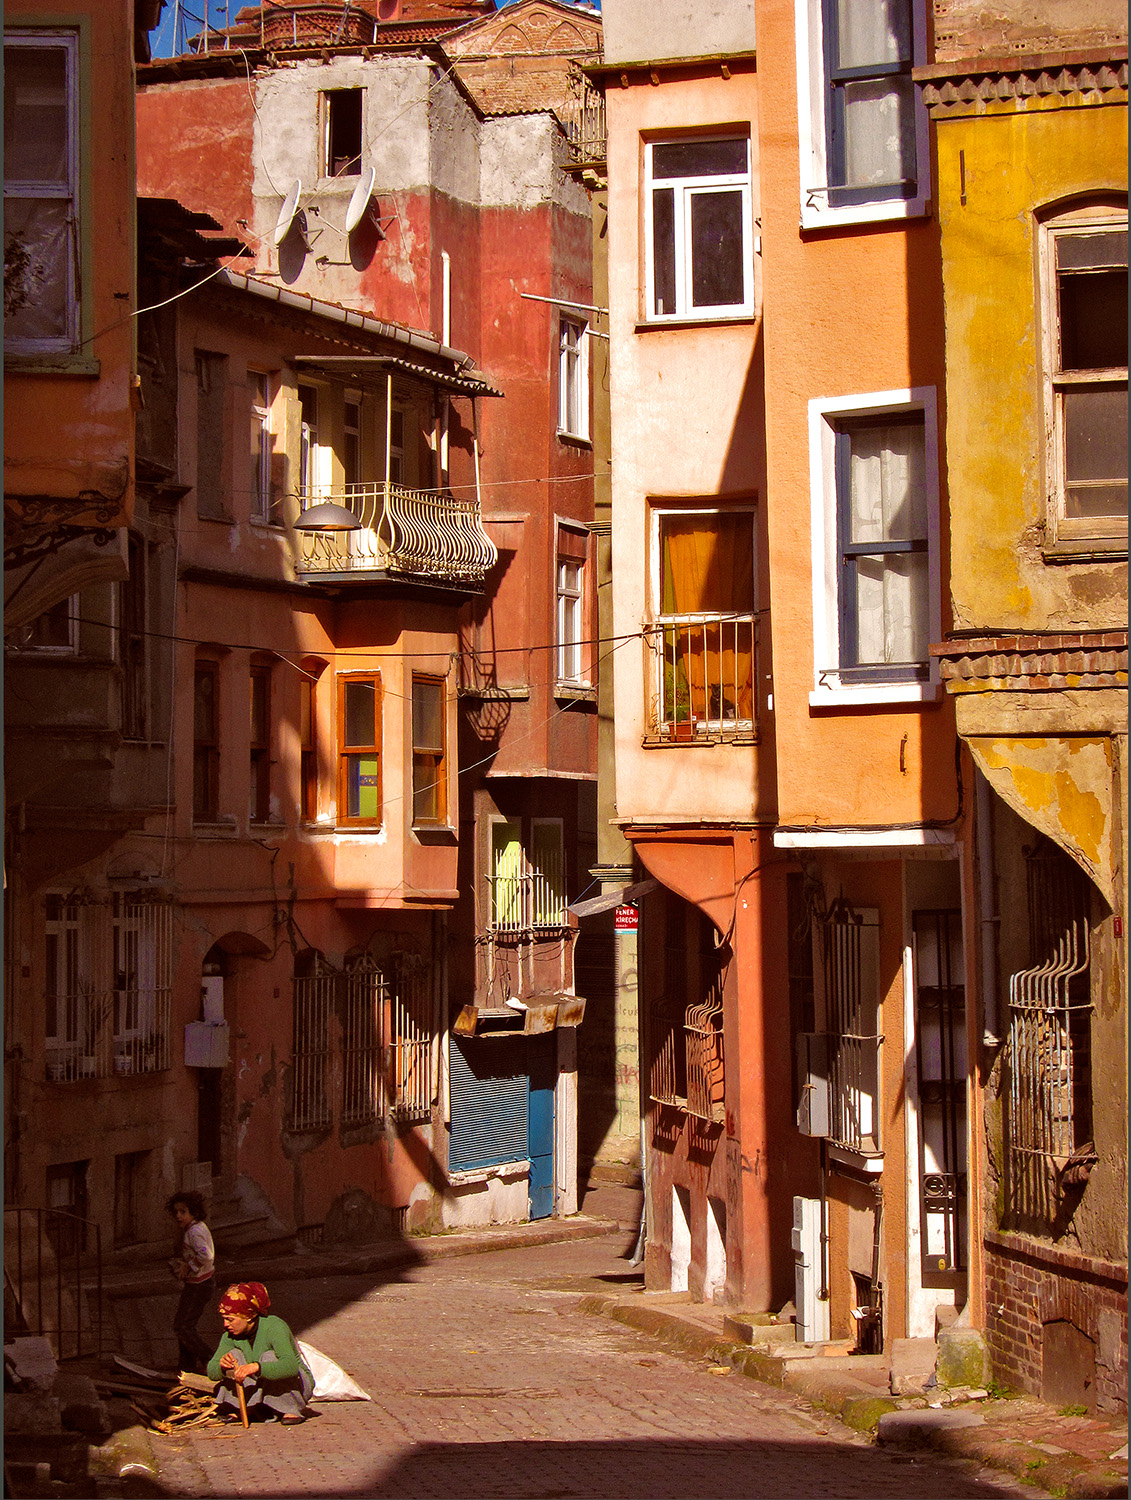 Our Neighborhood in Turkey